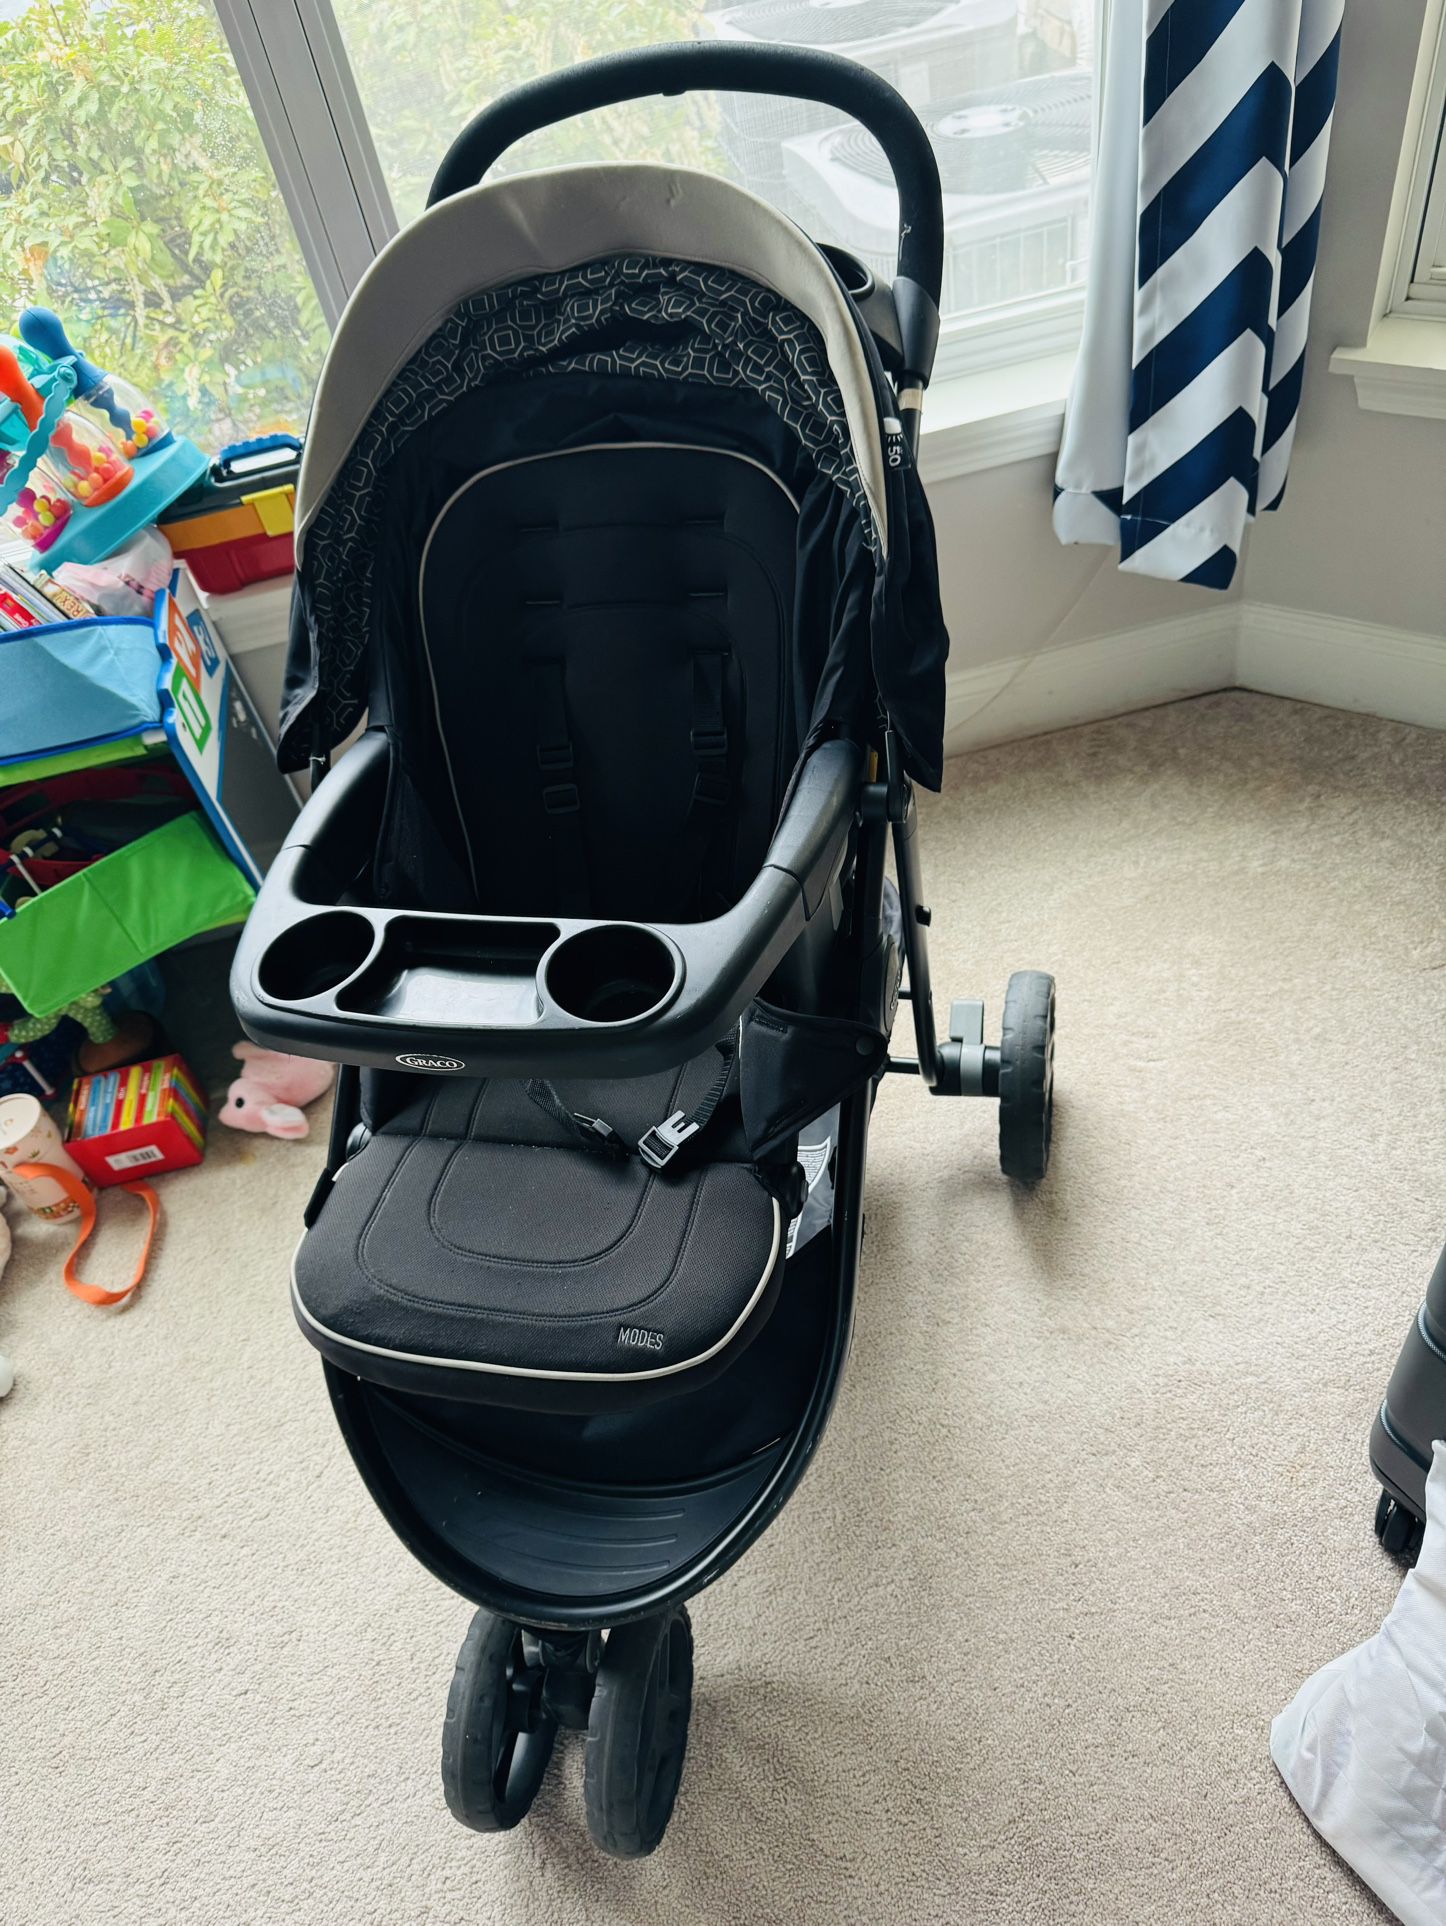 Graco Convertible Stroller For Toddler